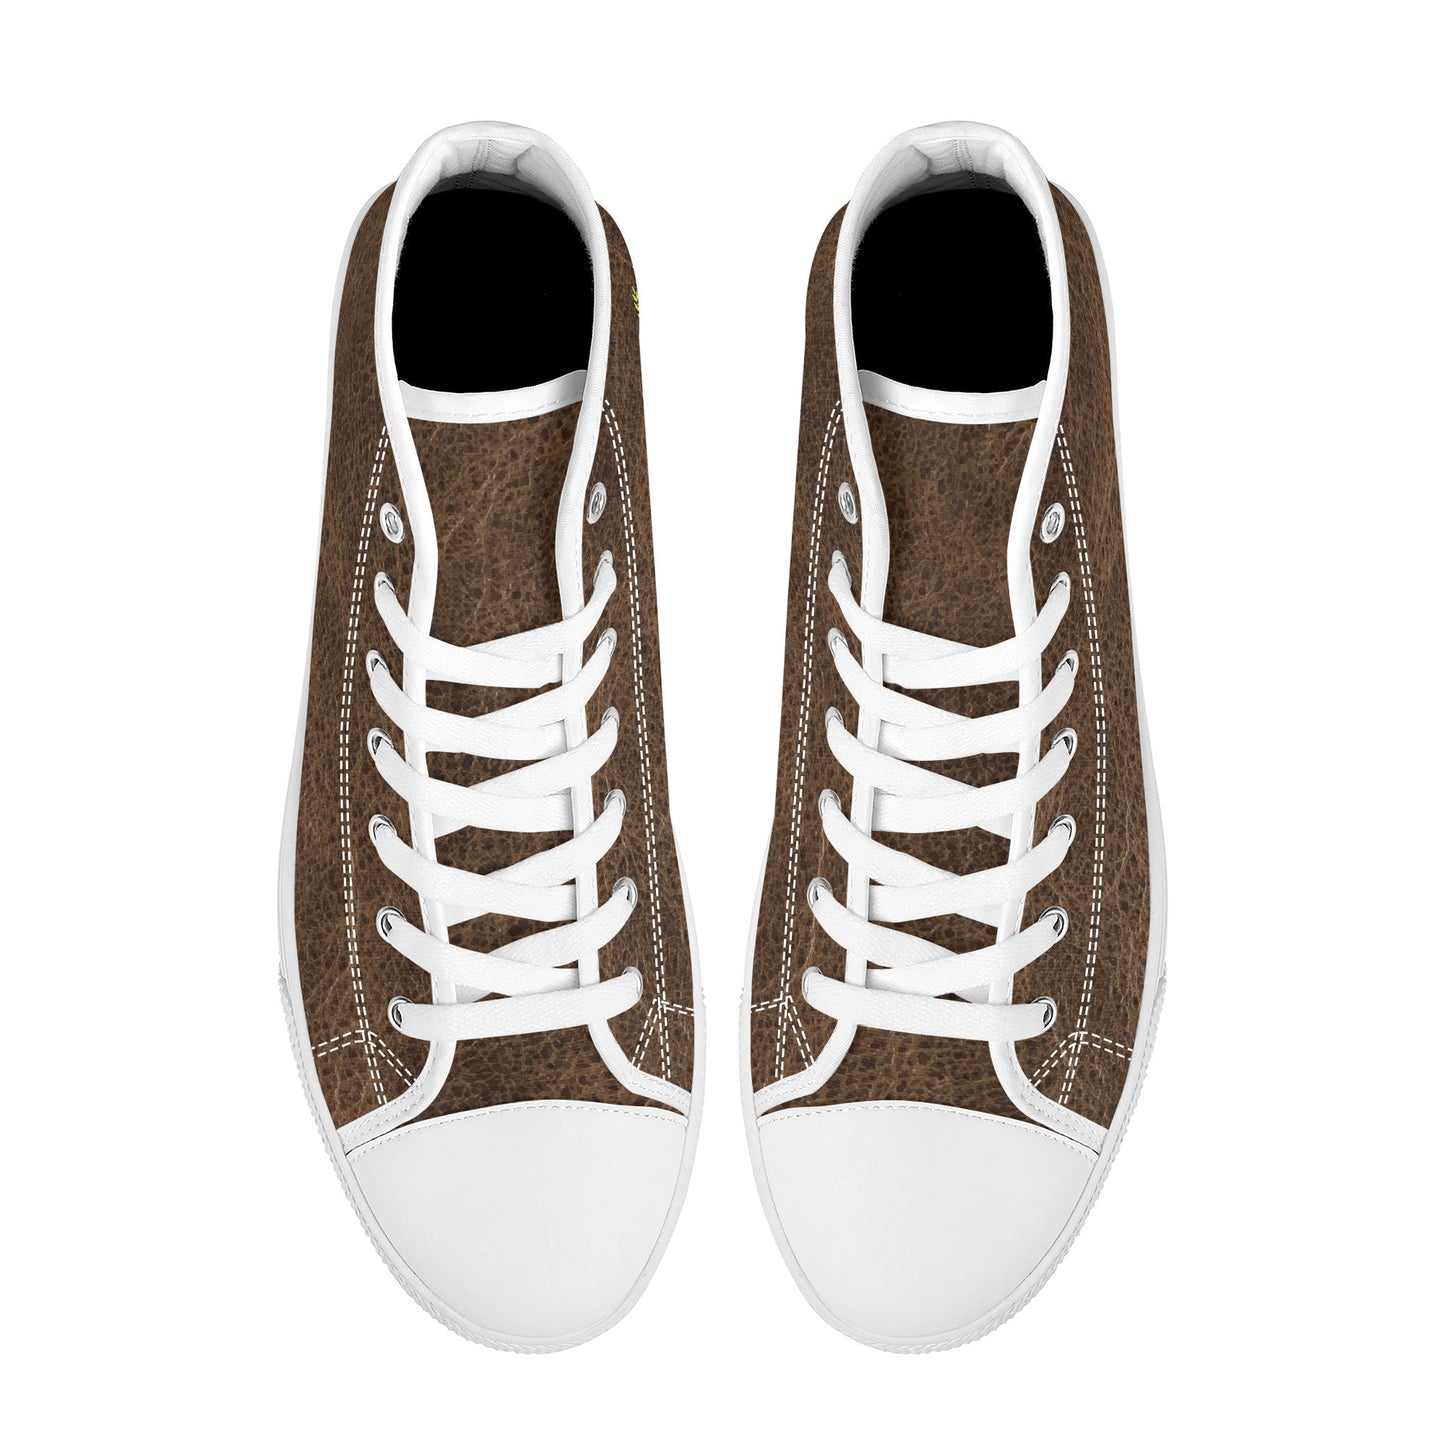 LEATHERTONE [Brown] High Top Sneakers | CANAANWEAR | Shoes | LEATHERTONE [Brown]